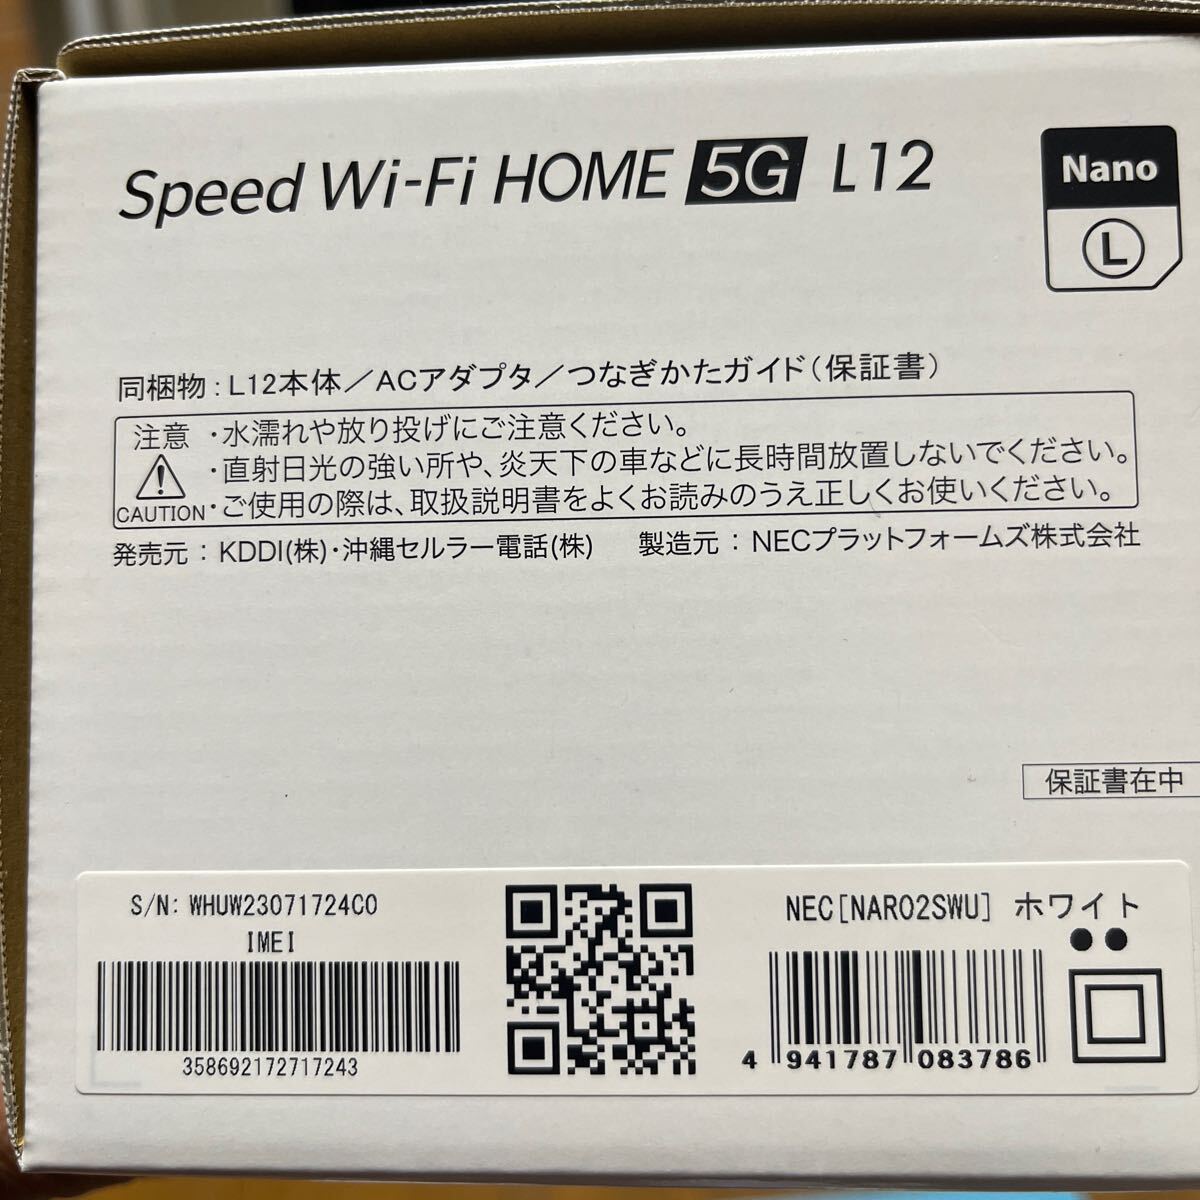 Speed Wi-Fi HOME 5G L12 NAR02 б/у прекрасный товар 